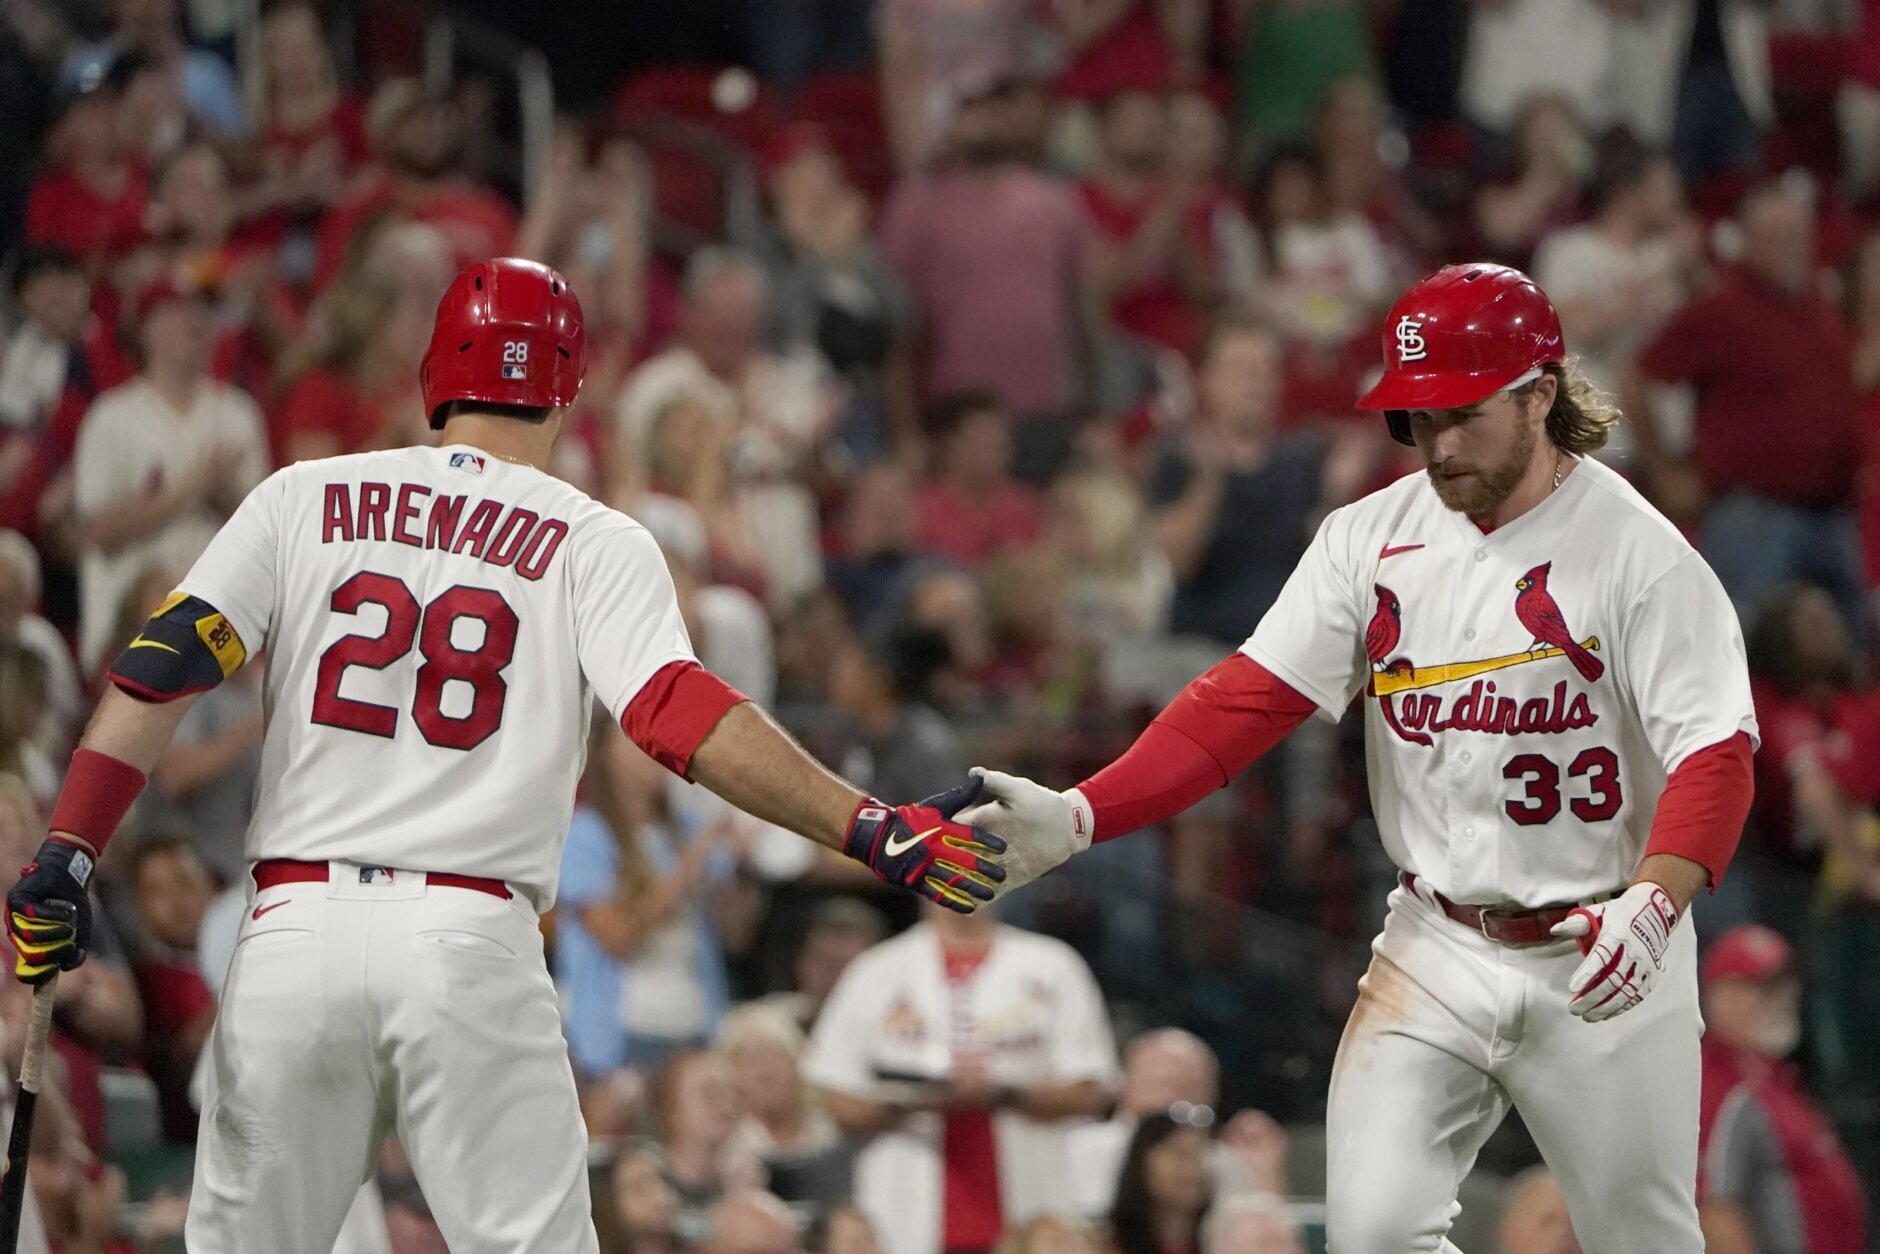 St. Louis Cardinals: Nolan Arenado finally hits his first spring homer